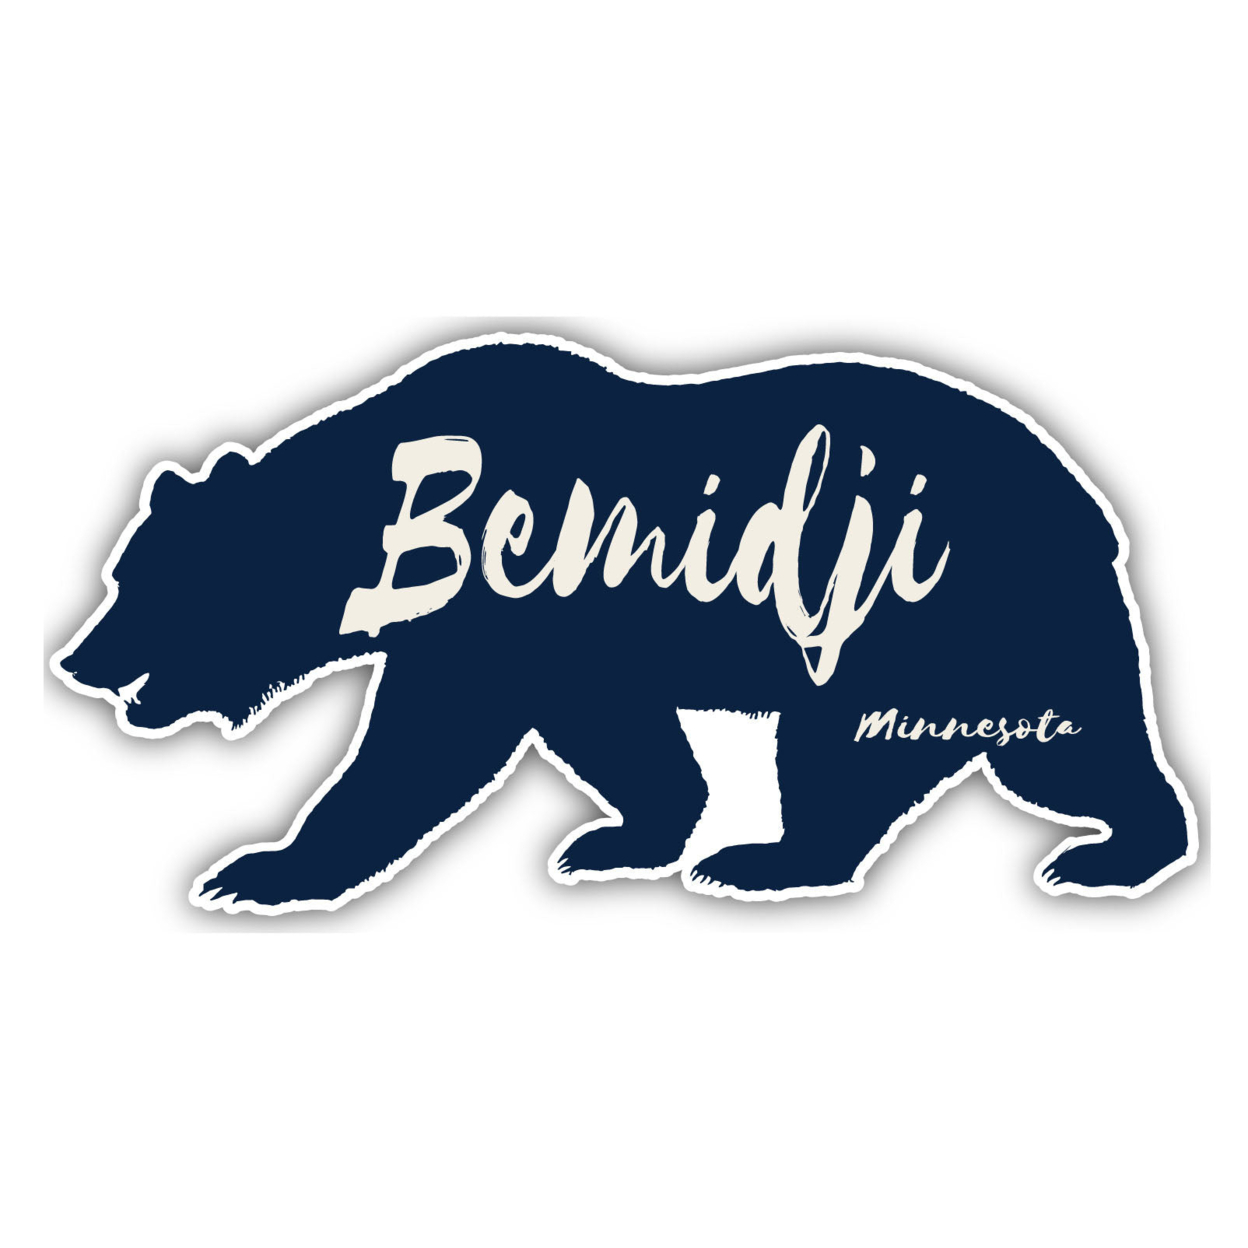 Bemidji Minnesota Souvenir Decorative Stickers (Choose Theme And Size) - 4-Pack, 2-Inch, Adventures Awaits